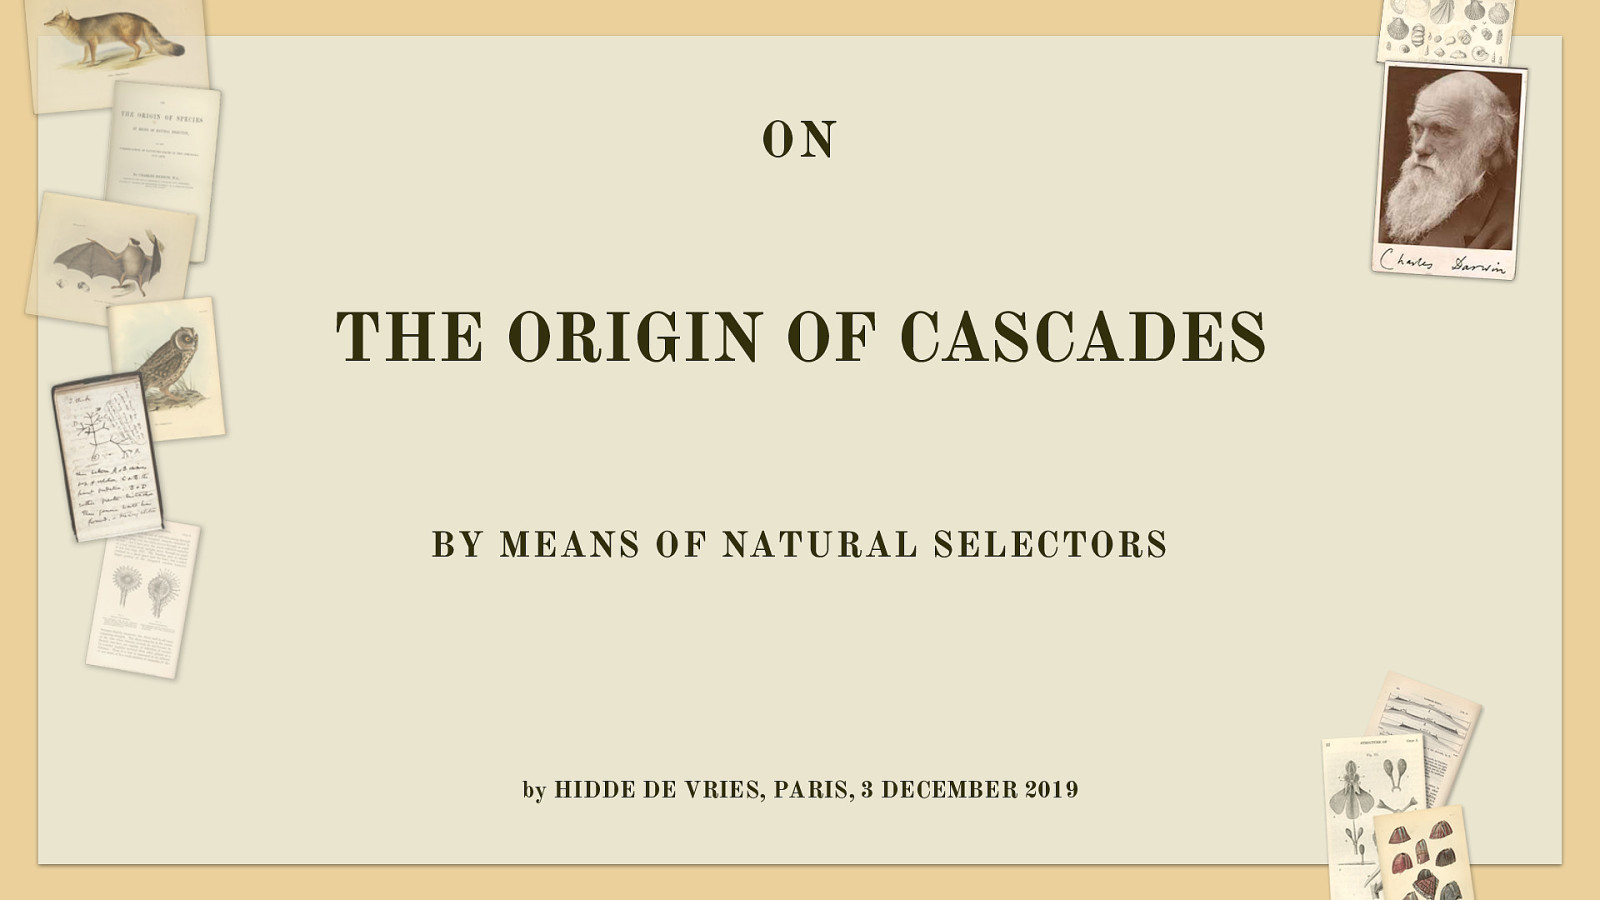 On the origin of cascades